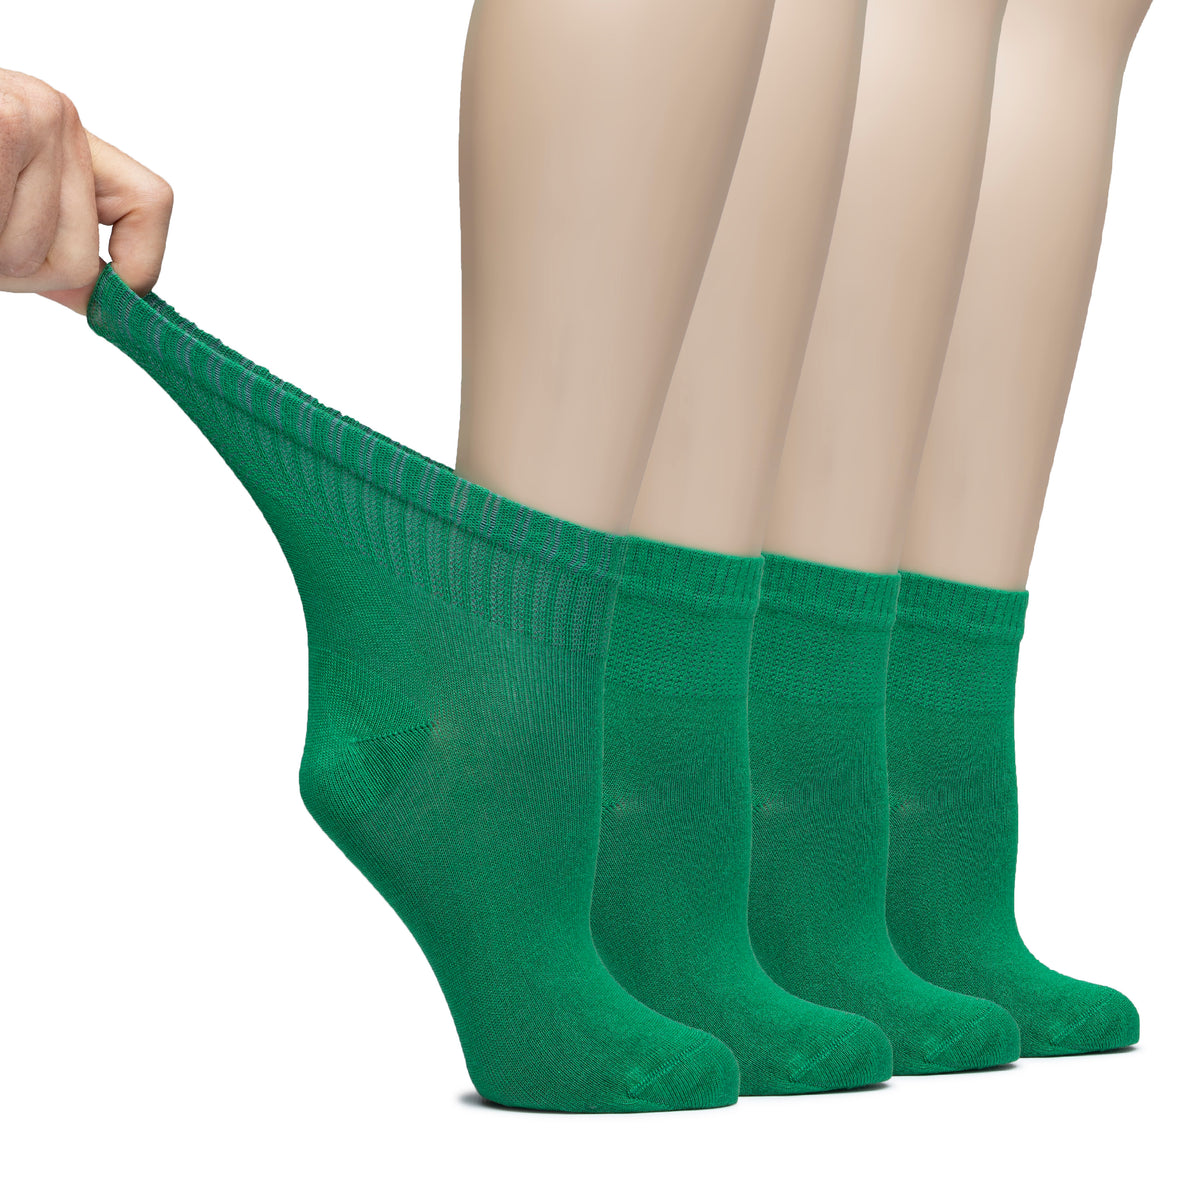 Hugh Ugoli Lightweight Women's Diabetic Ankle Socks Bamboo Thin Socks Seamless Toe and Non-Binding Top, 4 Pairs, , Shoe Size: 6-9/10-12 | Shoe Size: 6-9 | Dark Forest Green